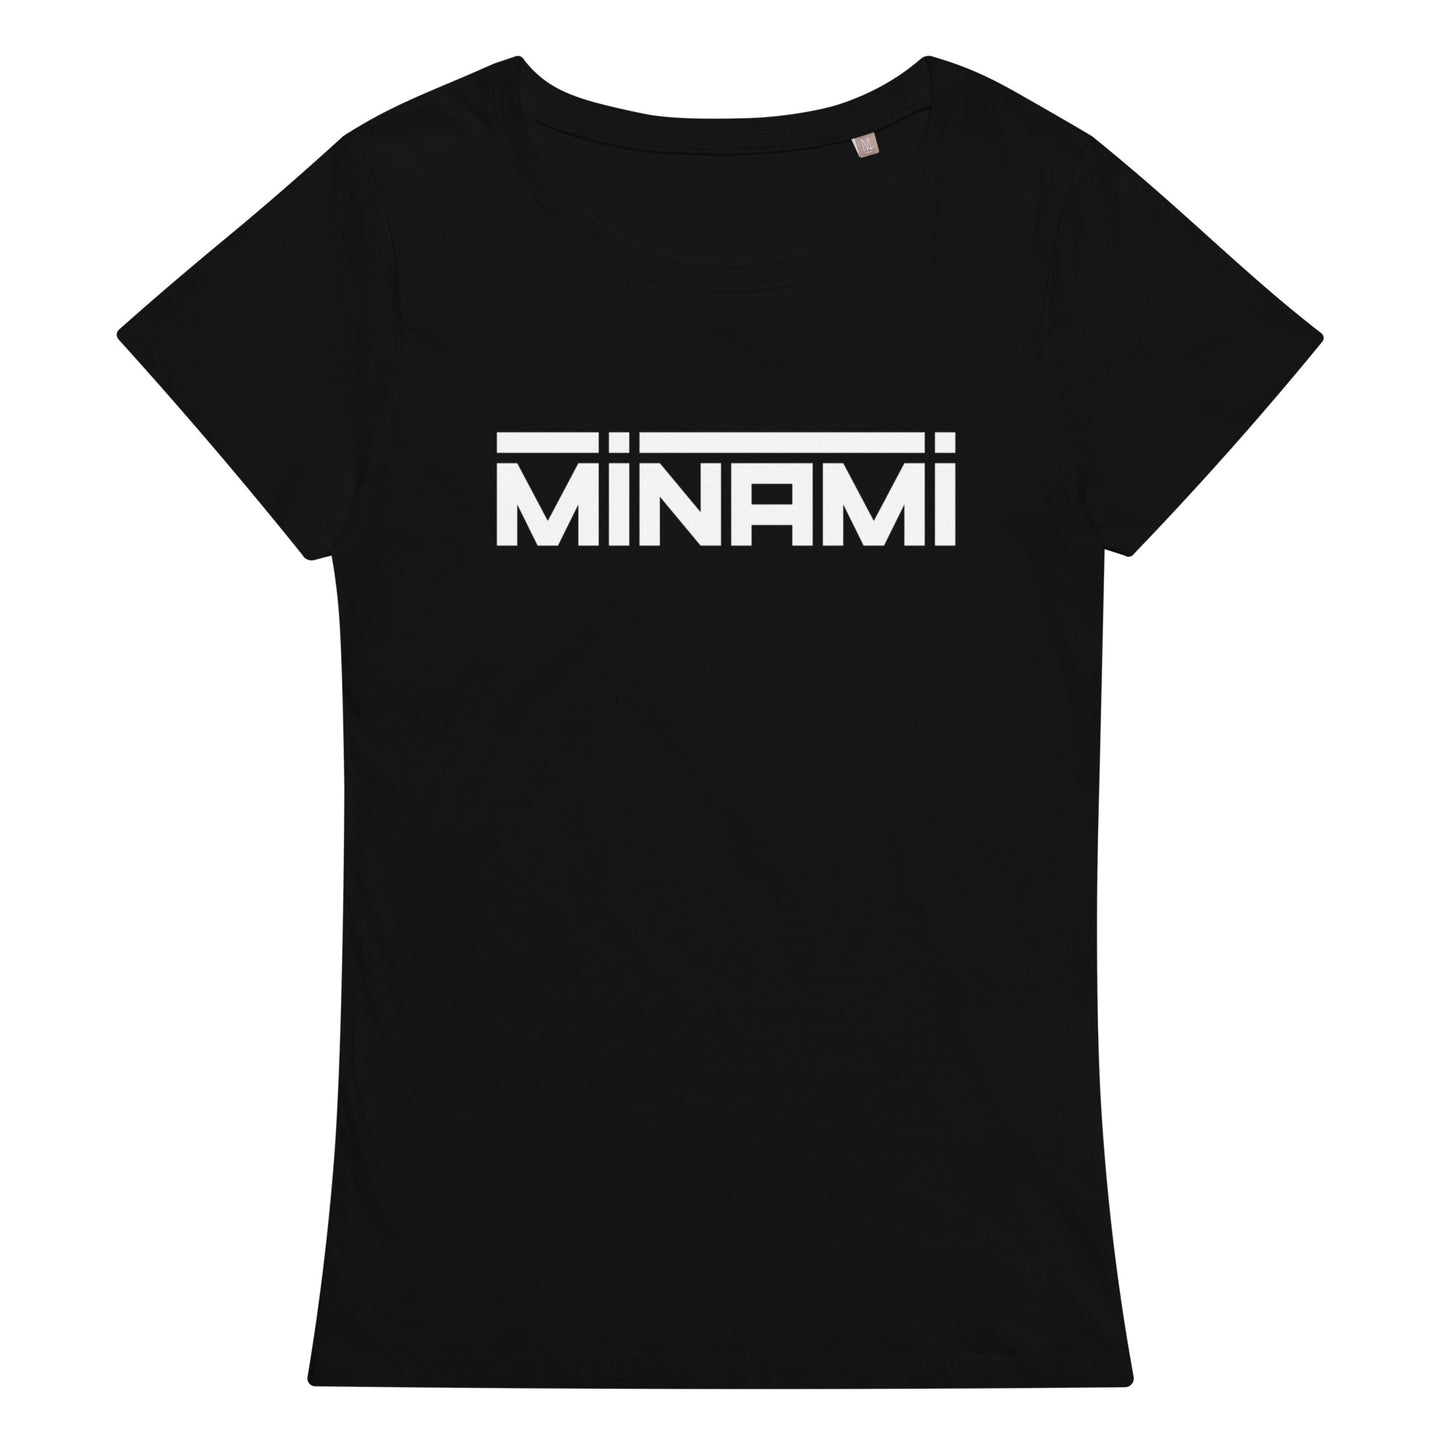 Minami Pop Rock Band Women's Organic T-Shirt Black